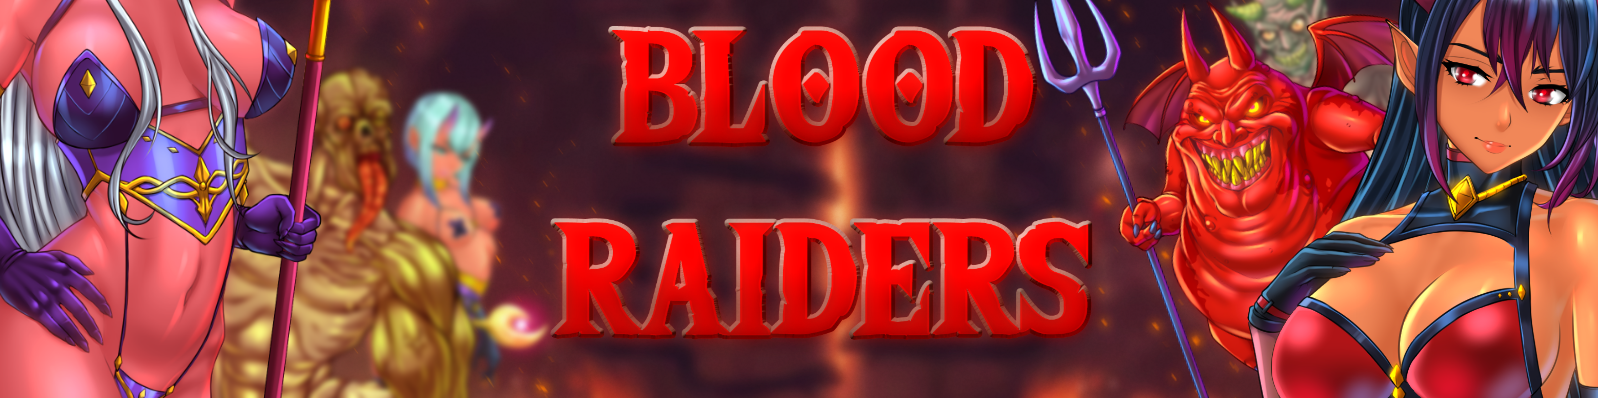 Play BLOOD RAIDERS!